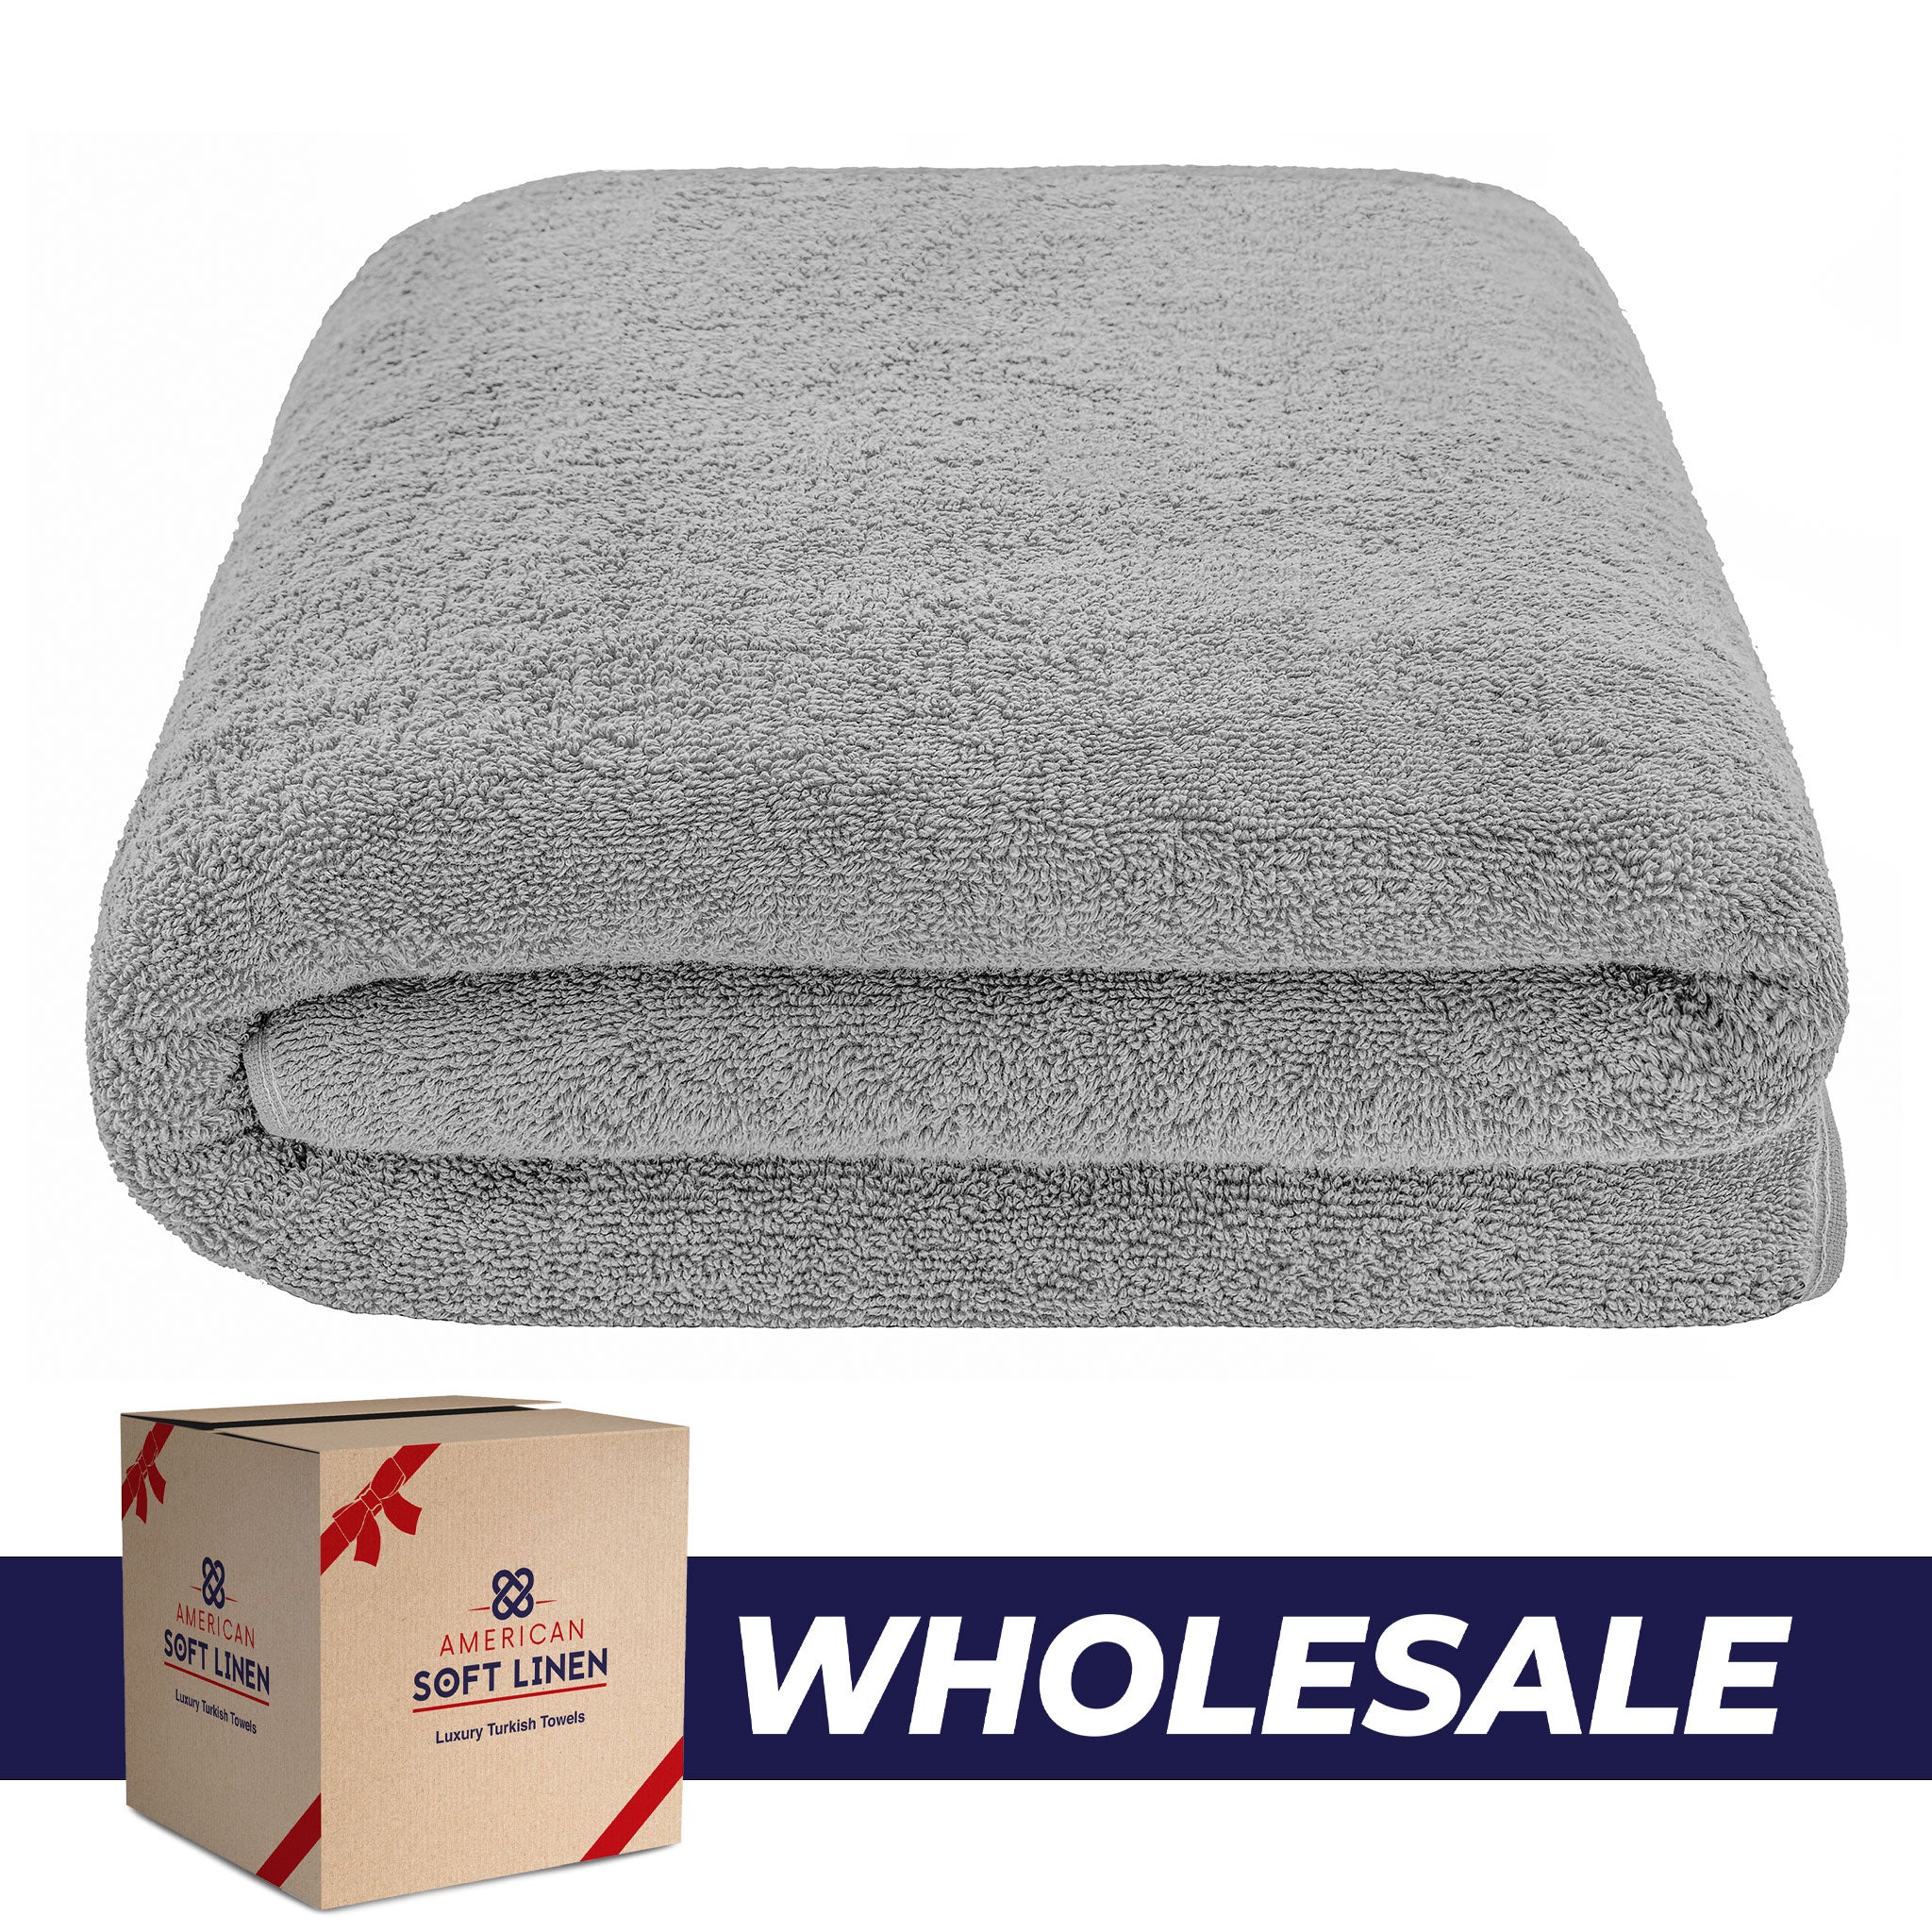 Extra Large Oversized Bath Towels 100% Cotton Turkish Bath Sheet 40x80 Gray